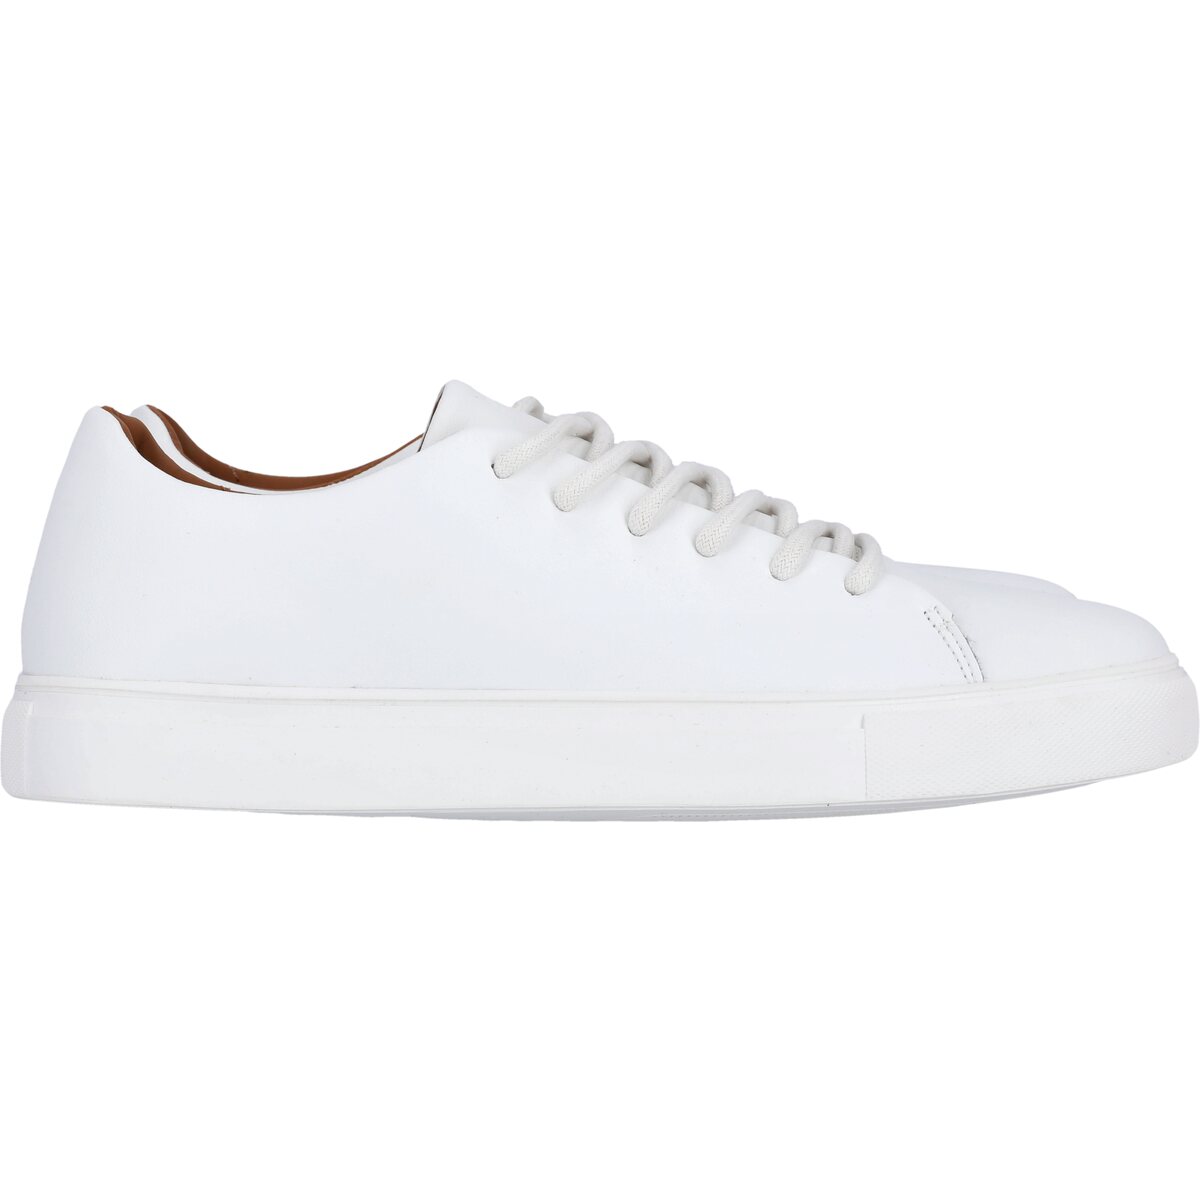 Athlecia Christinia Classic Sneakers - White 7 Shaws Department Stores